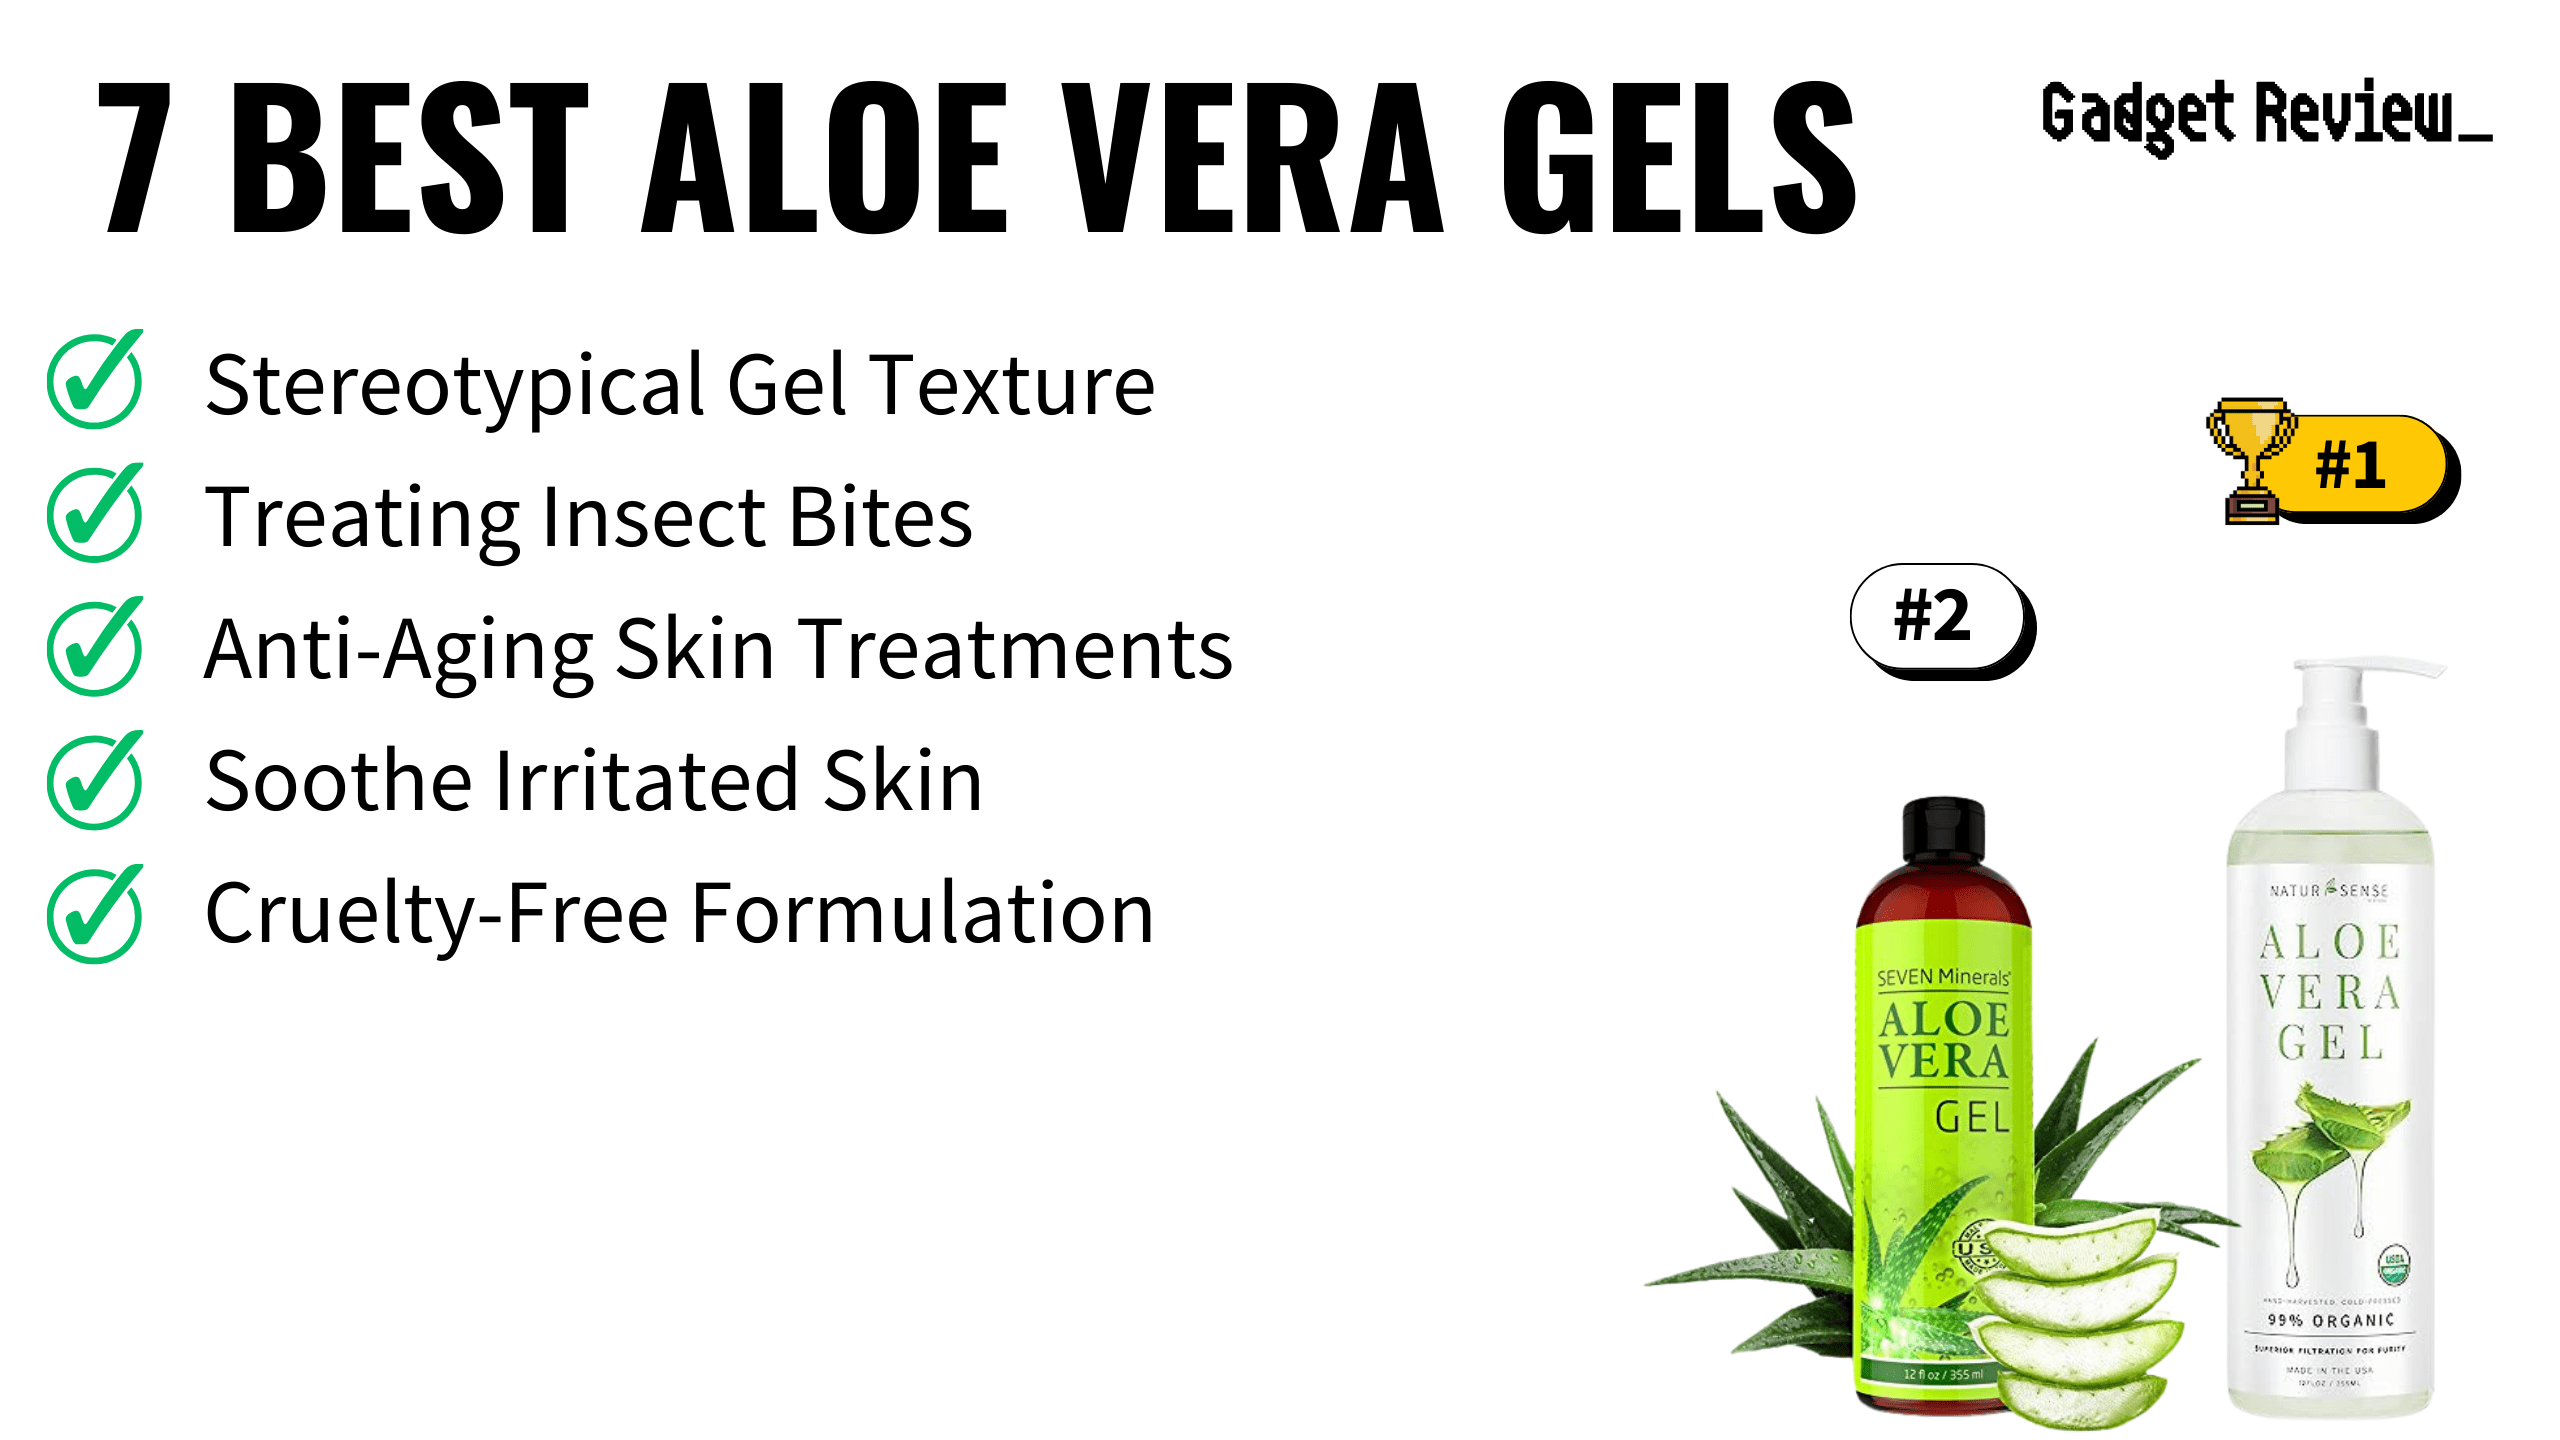 best aloe vera gels featured image that shows the top three best health & wellnes models